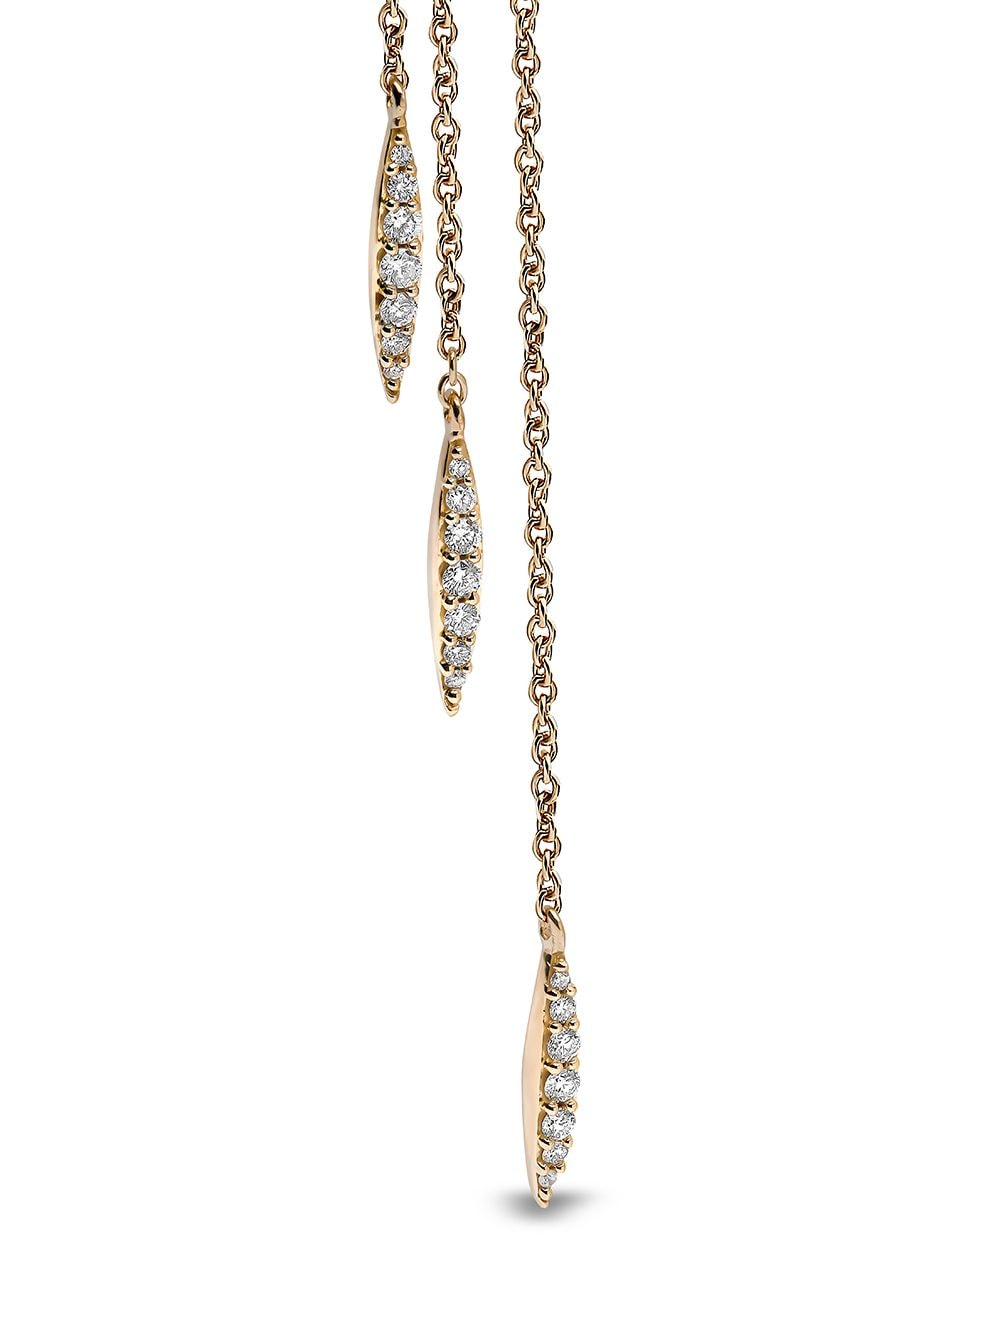 Shop Yoko London 18kt Yellow Gold Trend Freshwater Pearl And Diamond Chain Earrings